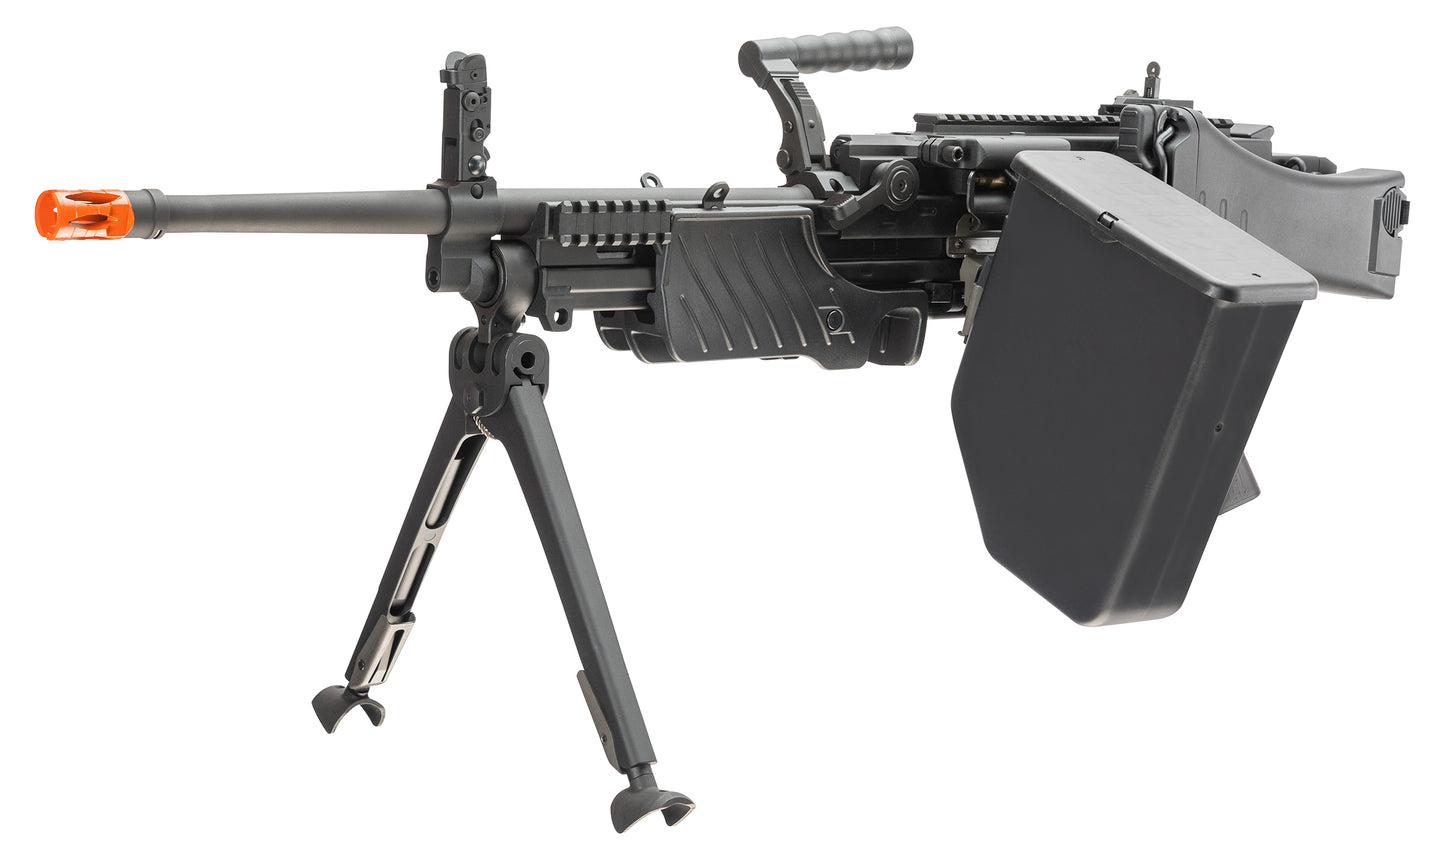 HK MG4 AEG(VFC)